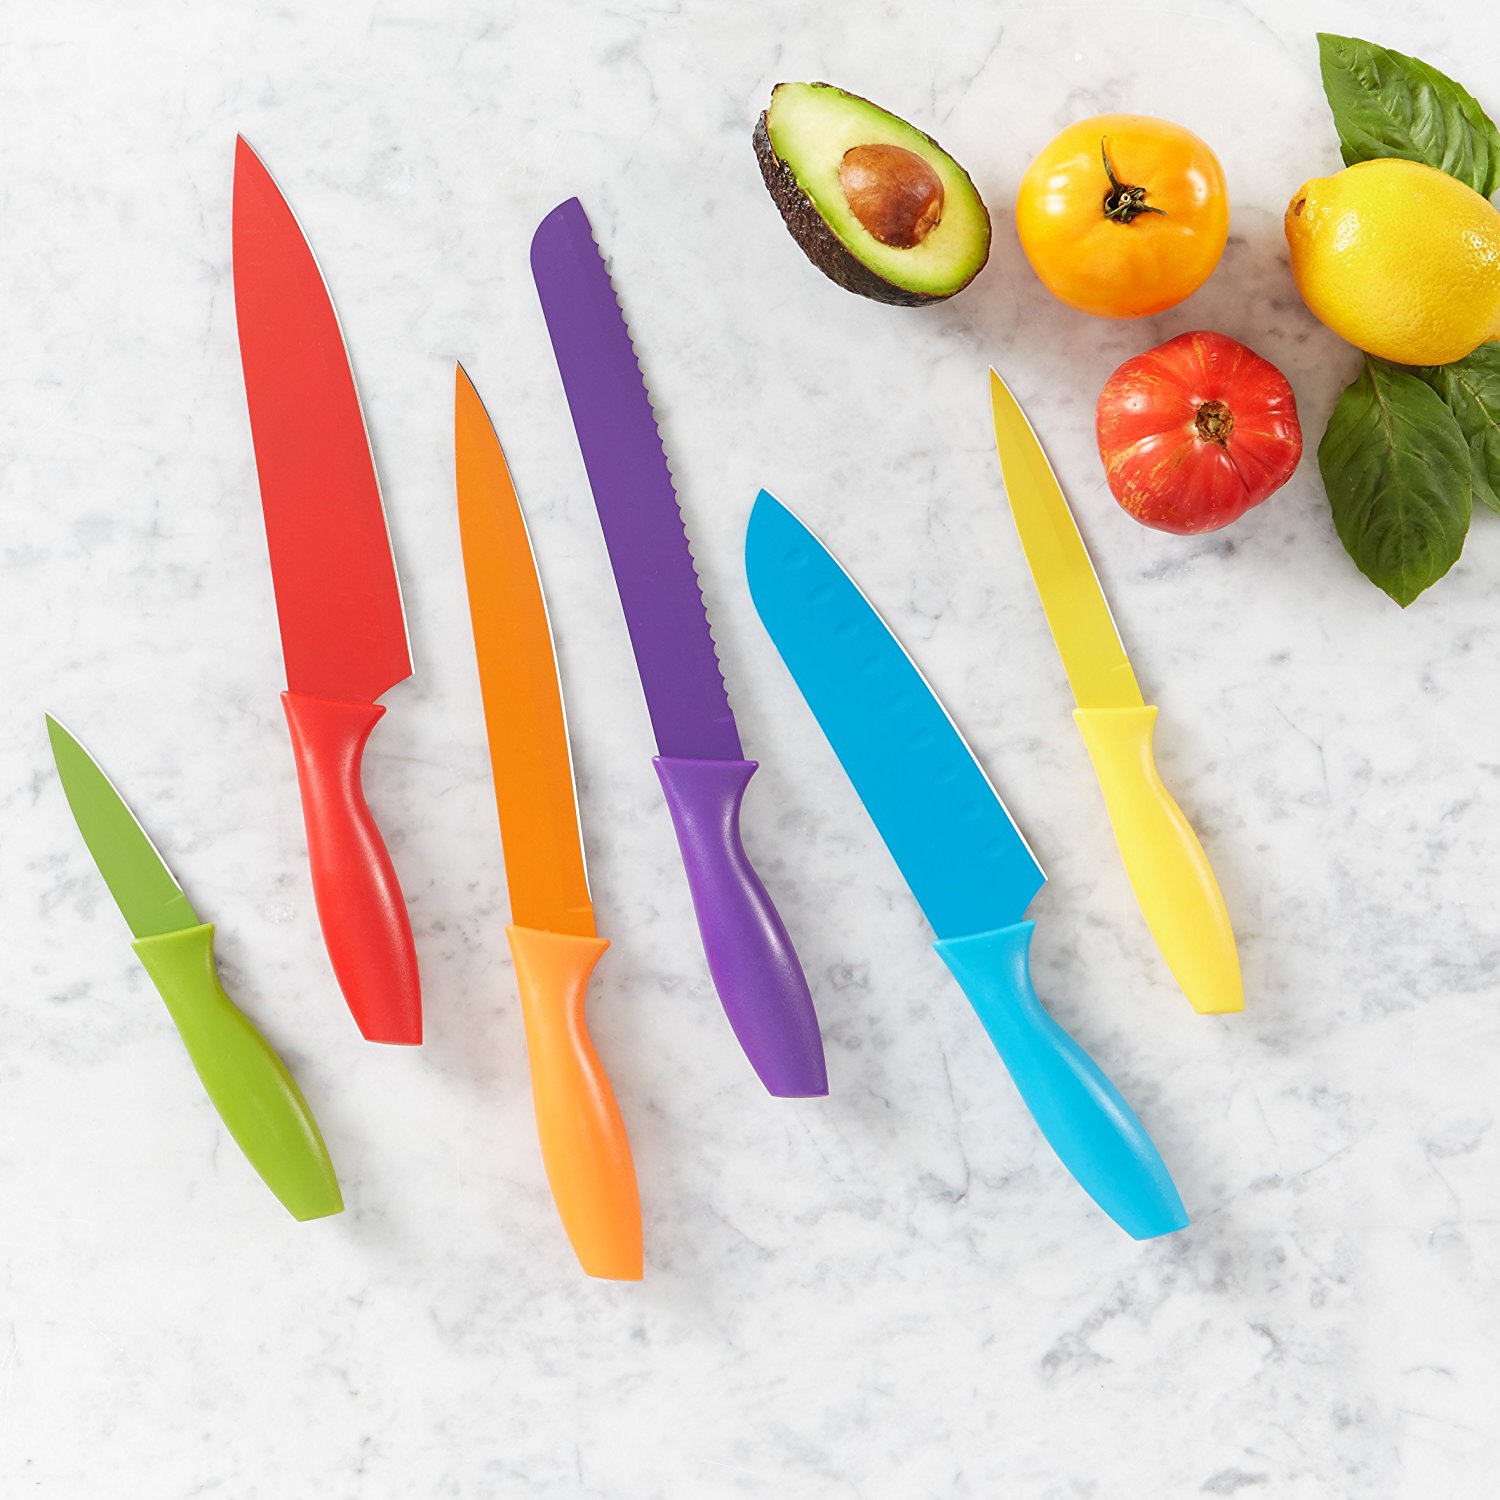 AmazonBasics 12-Piece Colored Knife Set – Just $15.99!